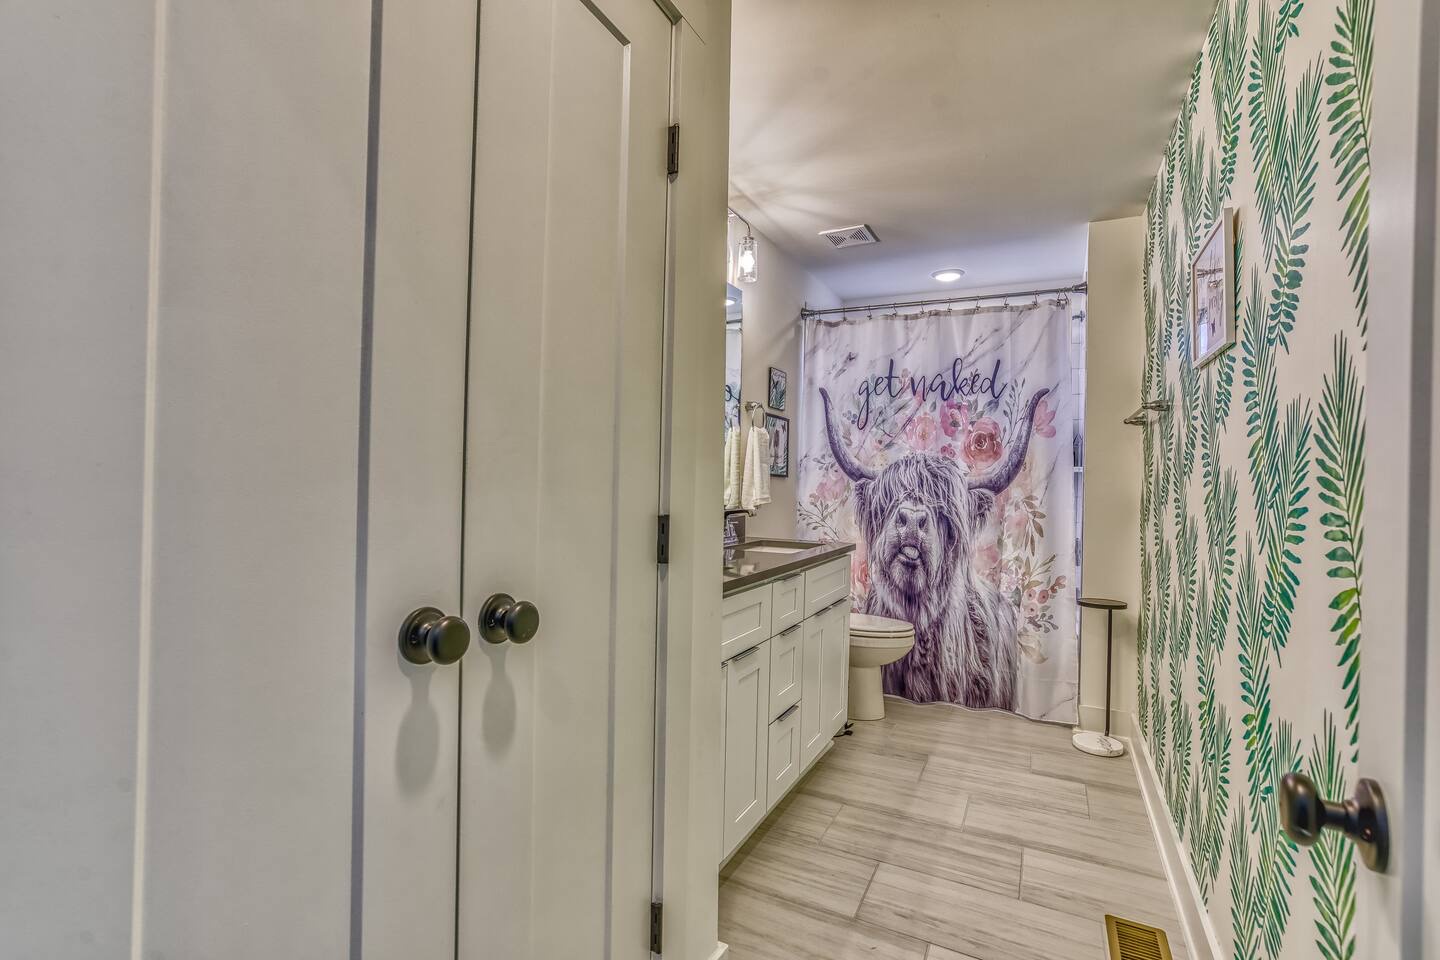 This 3rd floor en suite includes a double vanity & shower/tub combo